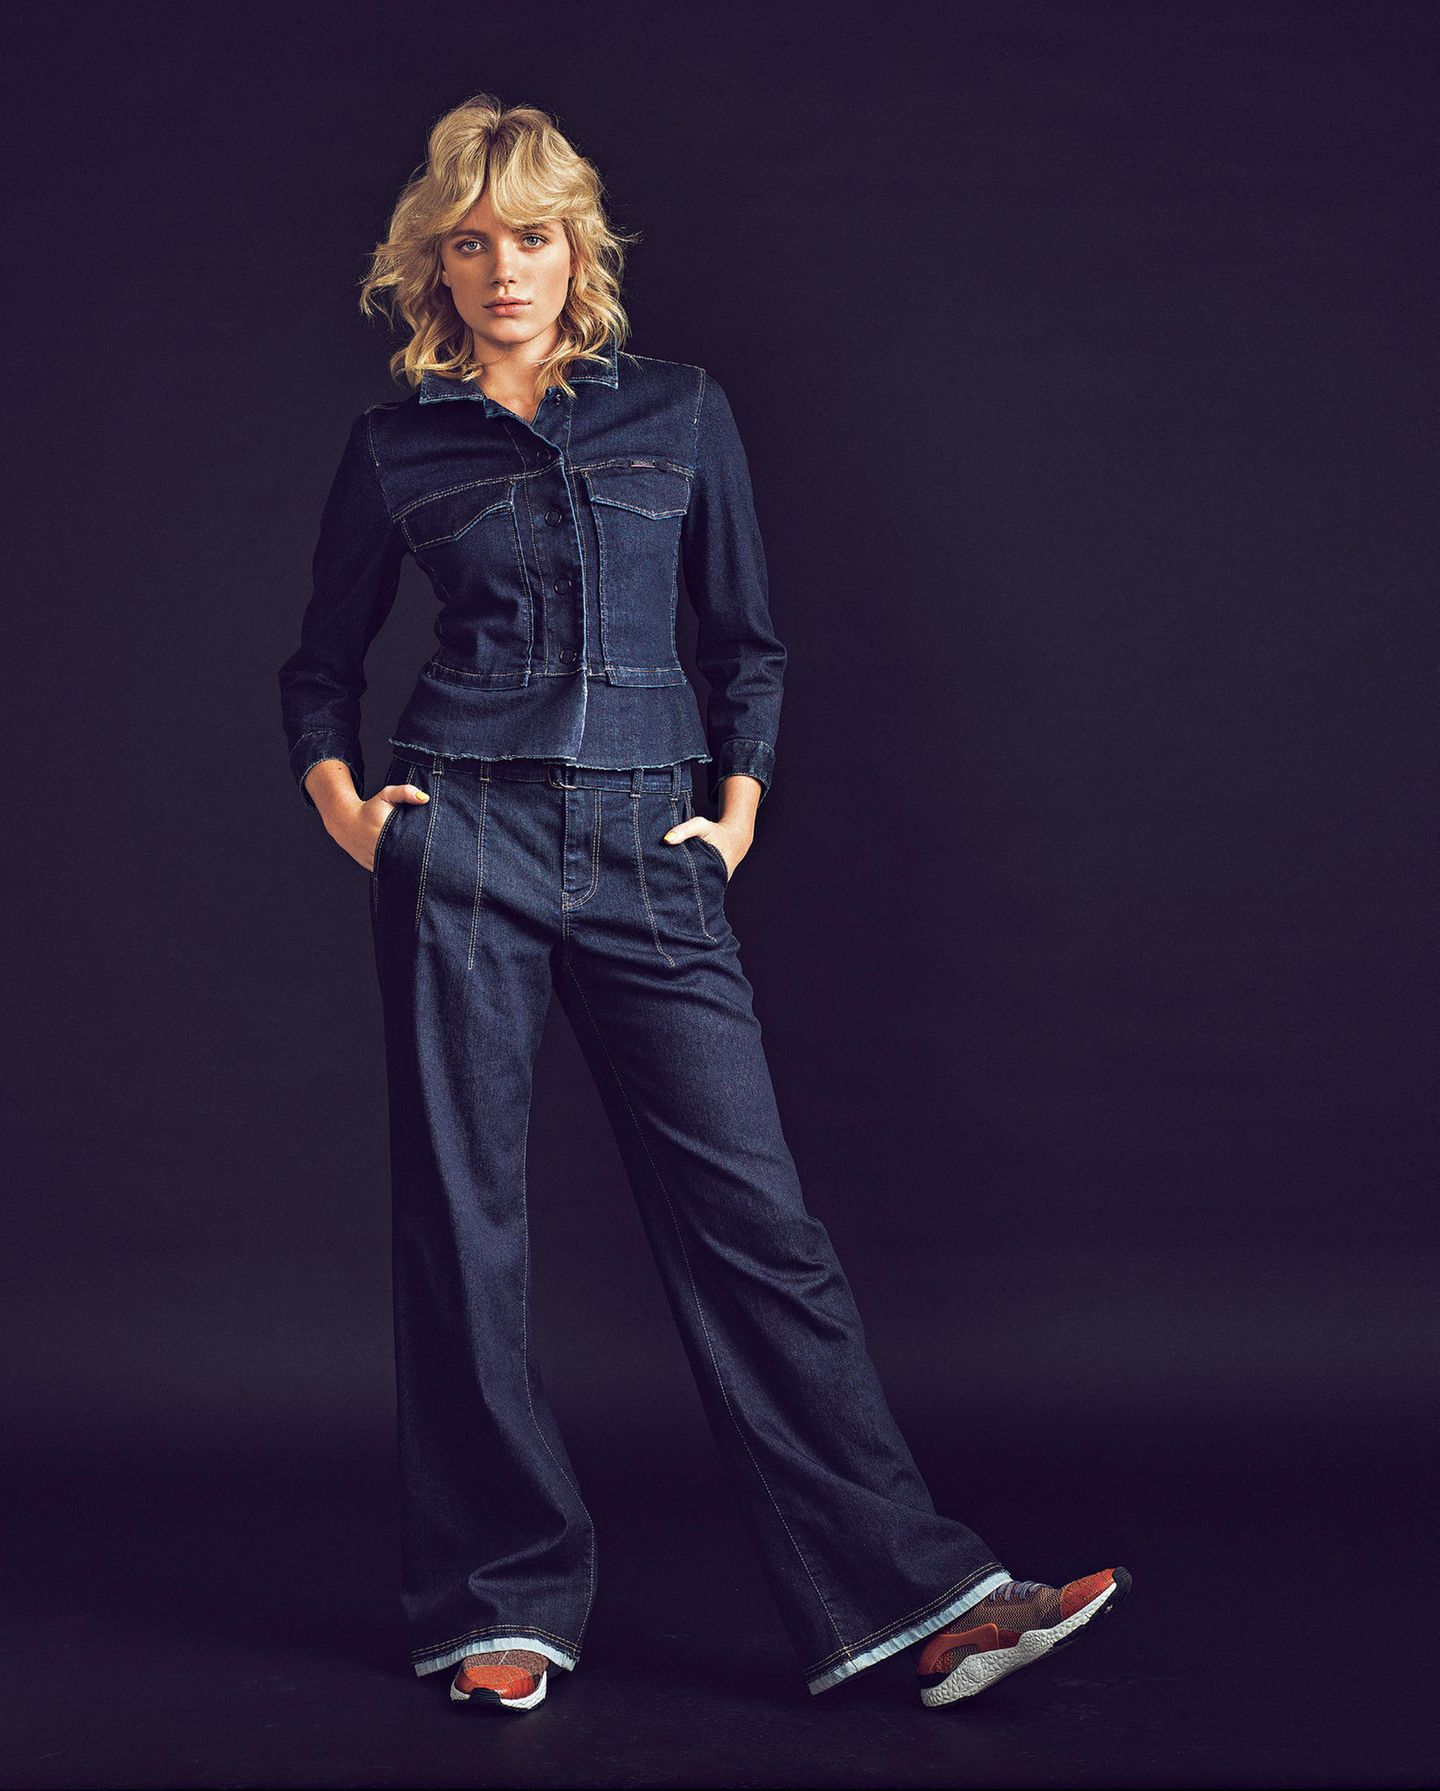 Jeans-Trends: Model